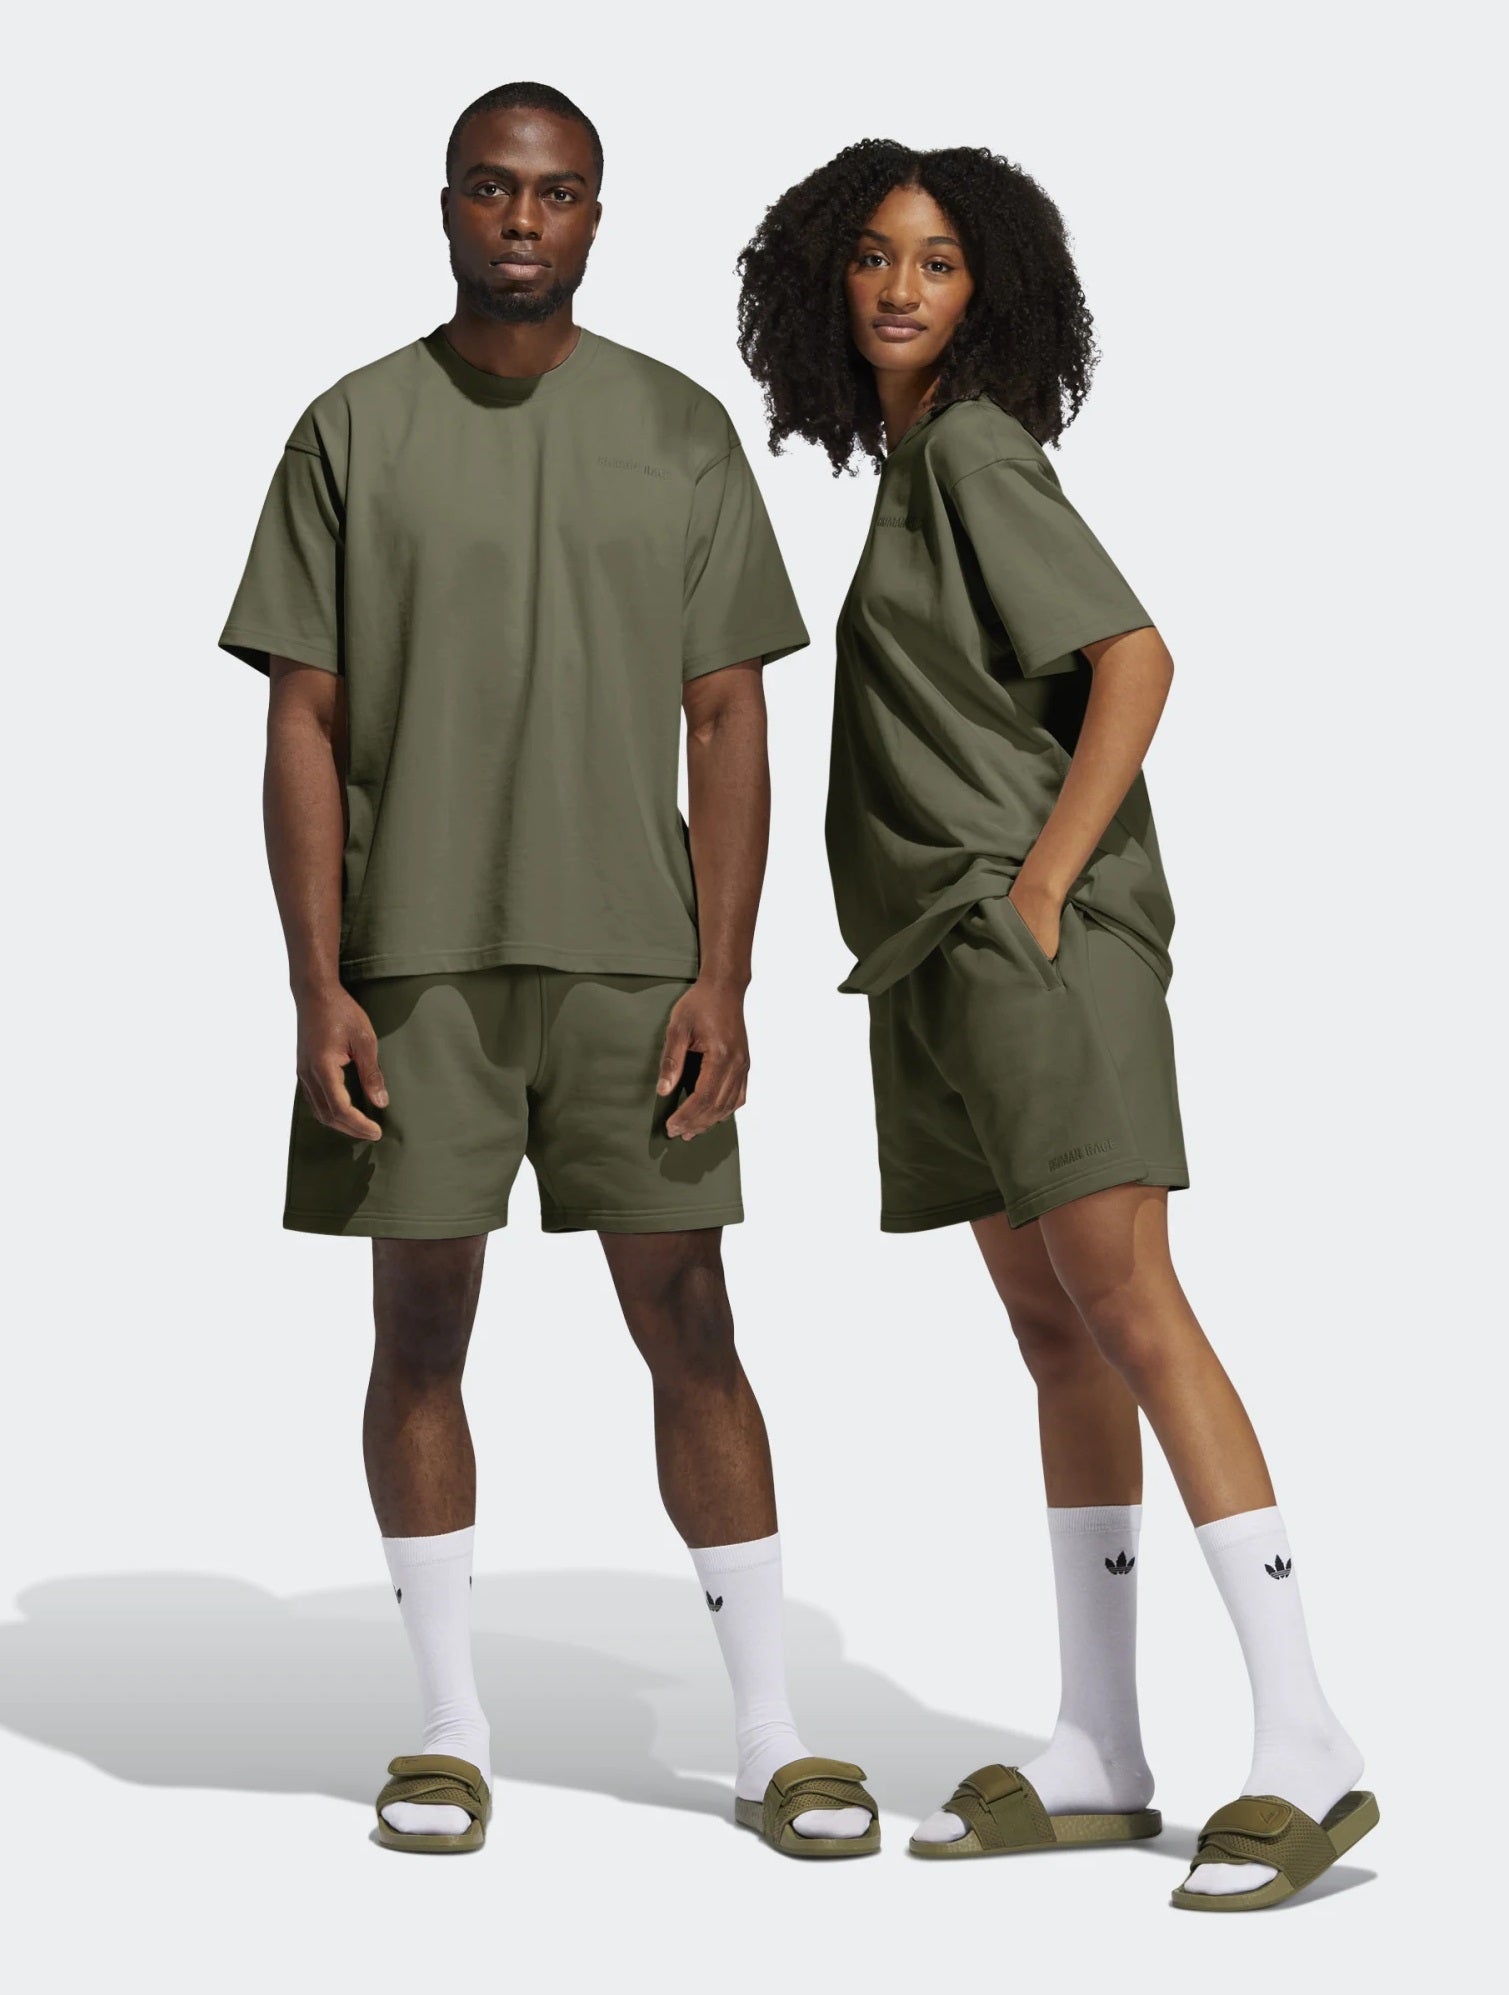 Adidas Originals Pharrell Williams Basics Shorts (Gender Neutral) GH4397